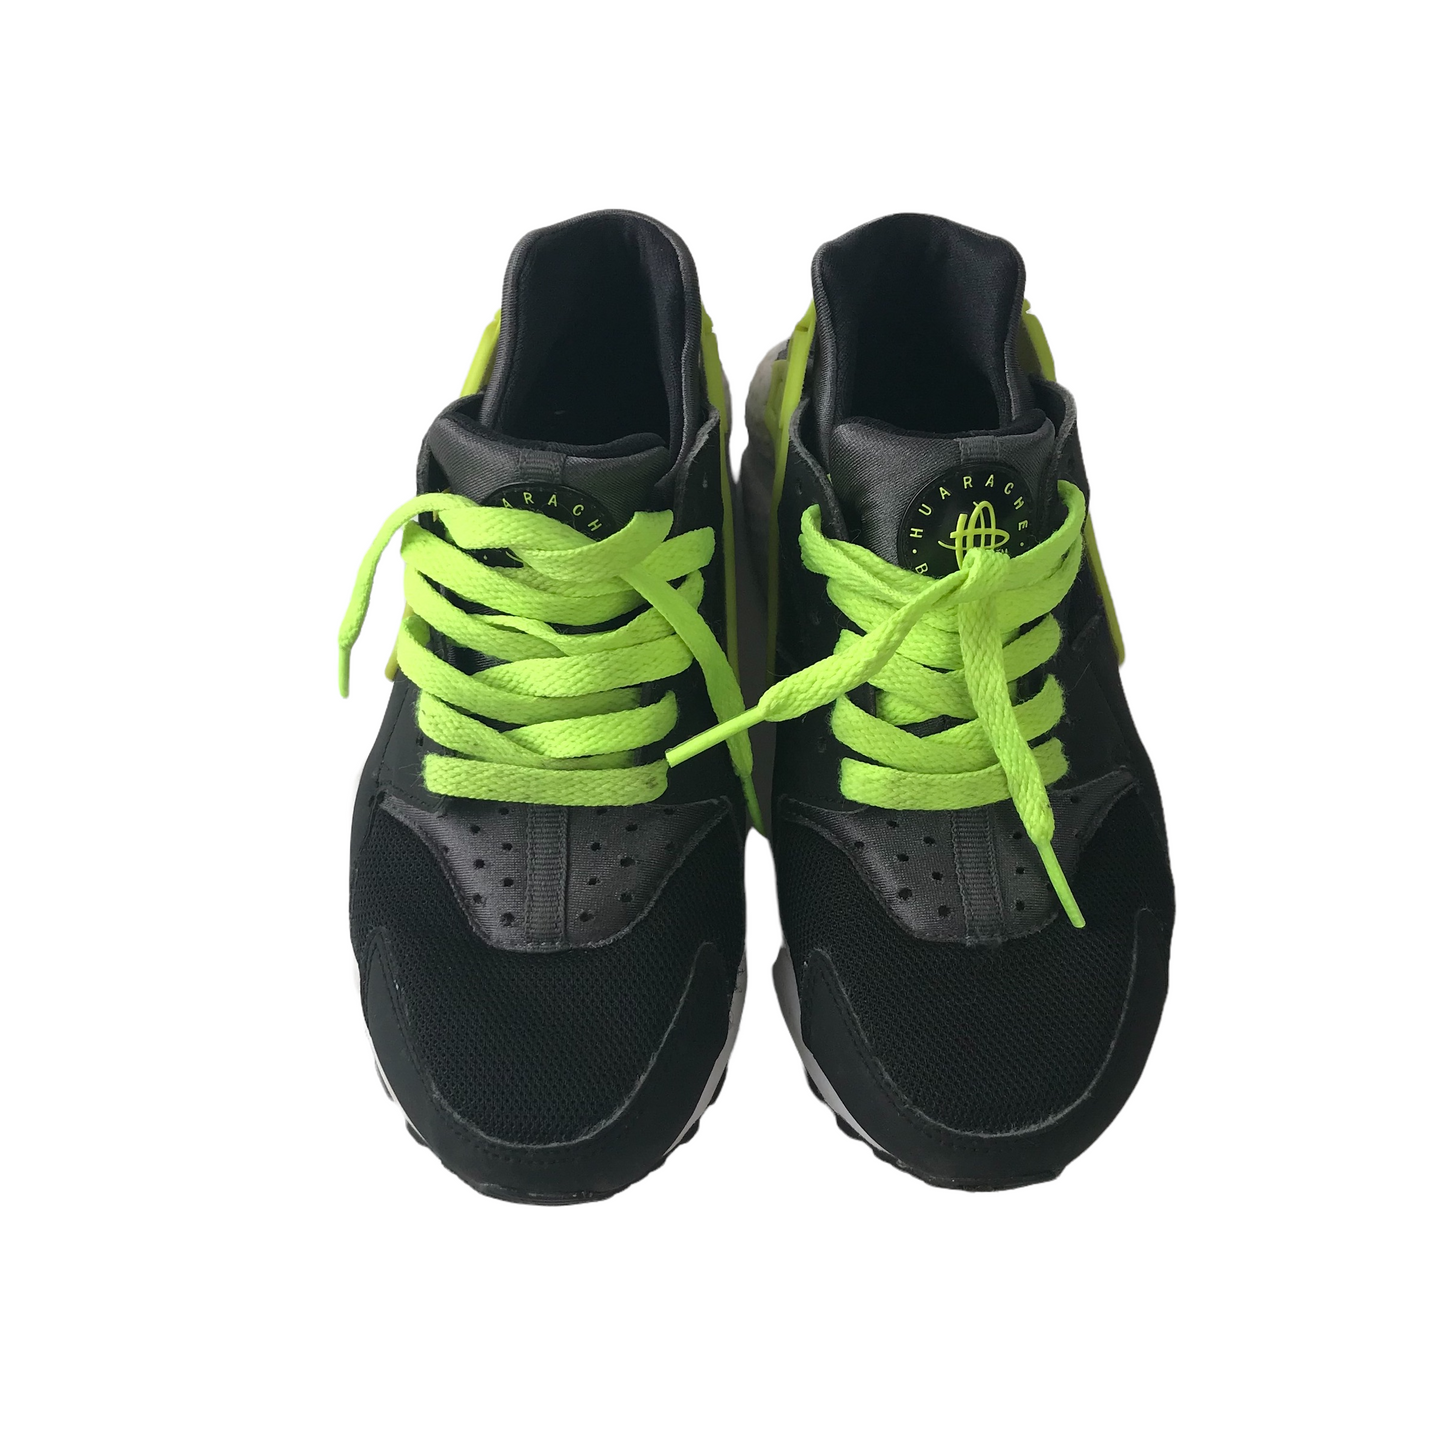 Nike Huarache Neon Black Grey Trainers UK size 3